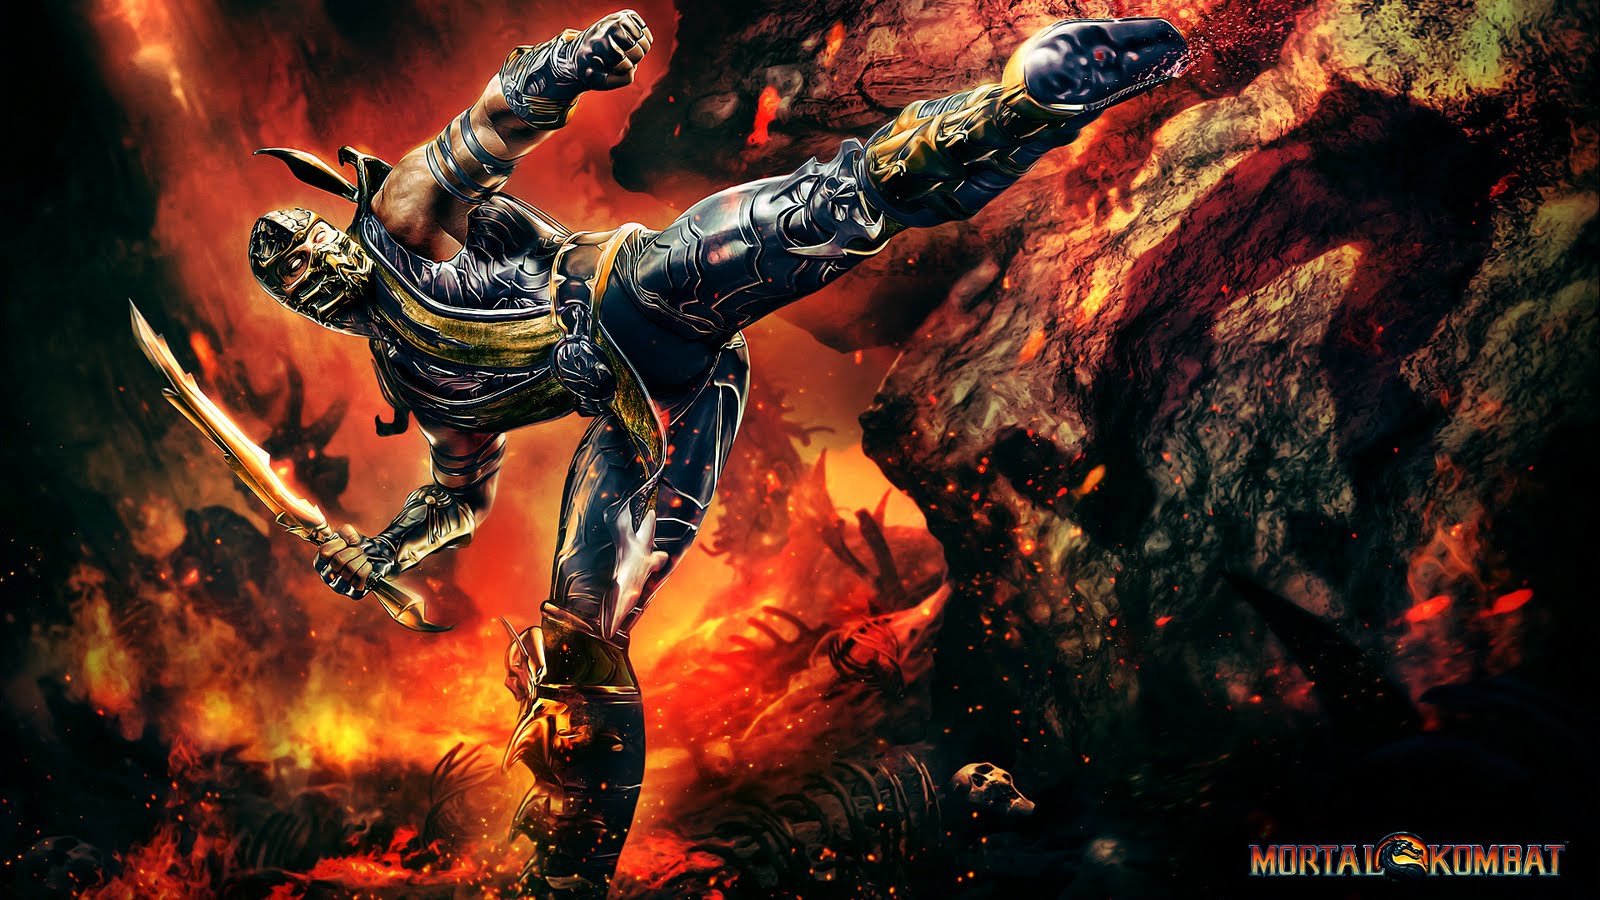 ... Dєรigи - тнє Bєรт: wallpaper - Scorpion Mortal Kombat